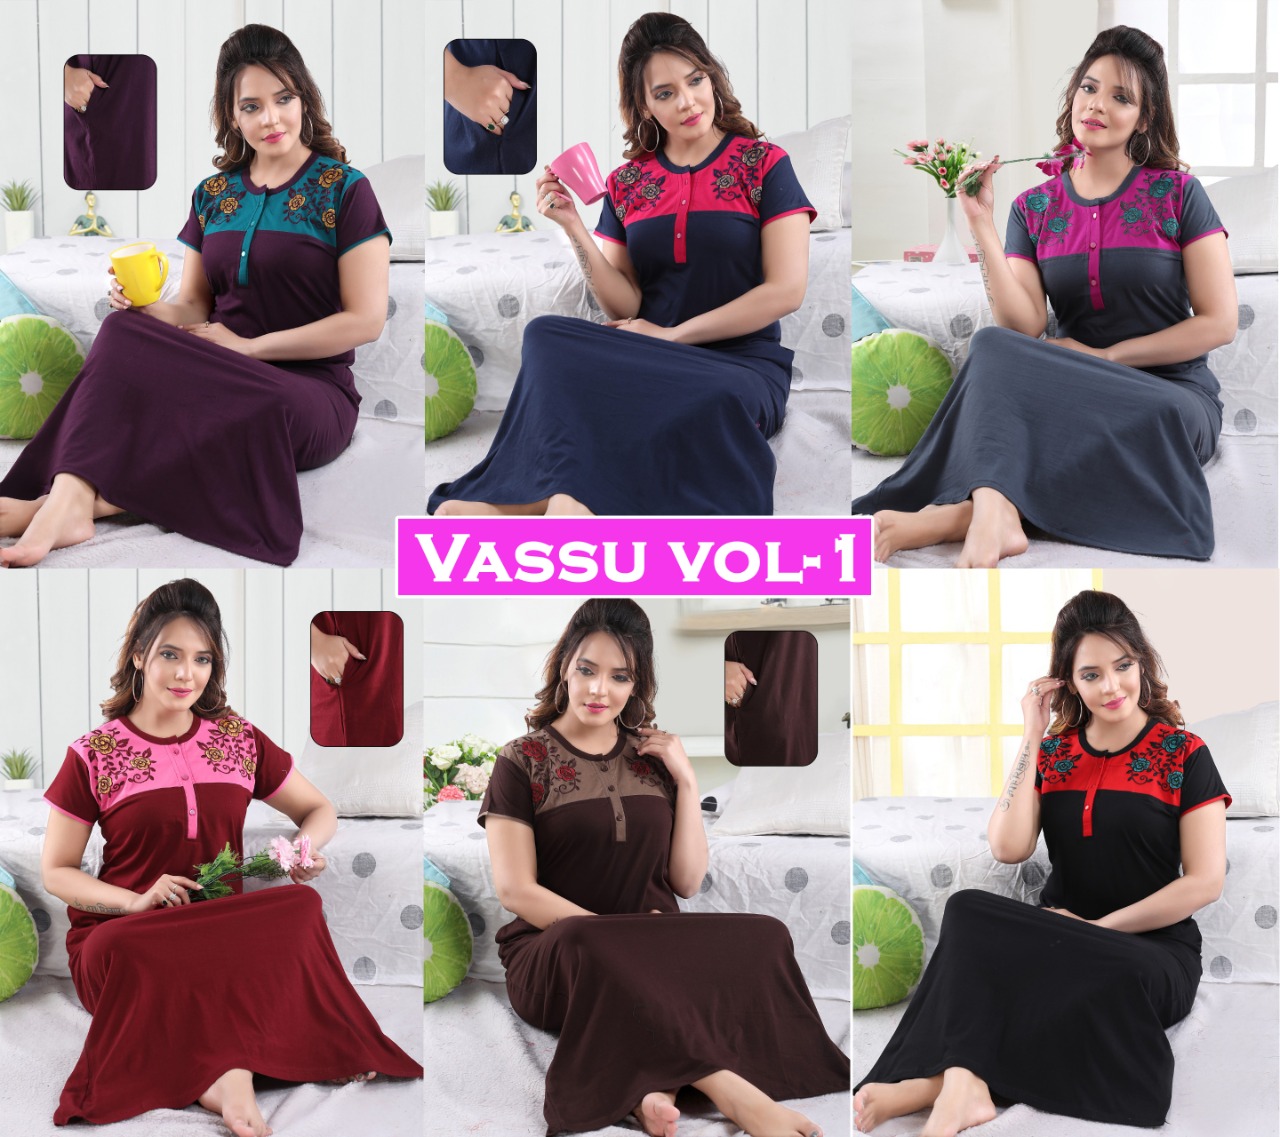 Buy APRATIM Women's/Girls Hosiery Cotton Printed Maxi/Night Gown/Nightwear/ Nighty/Sleepwear-3 Turquoise at Amazon.in